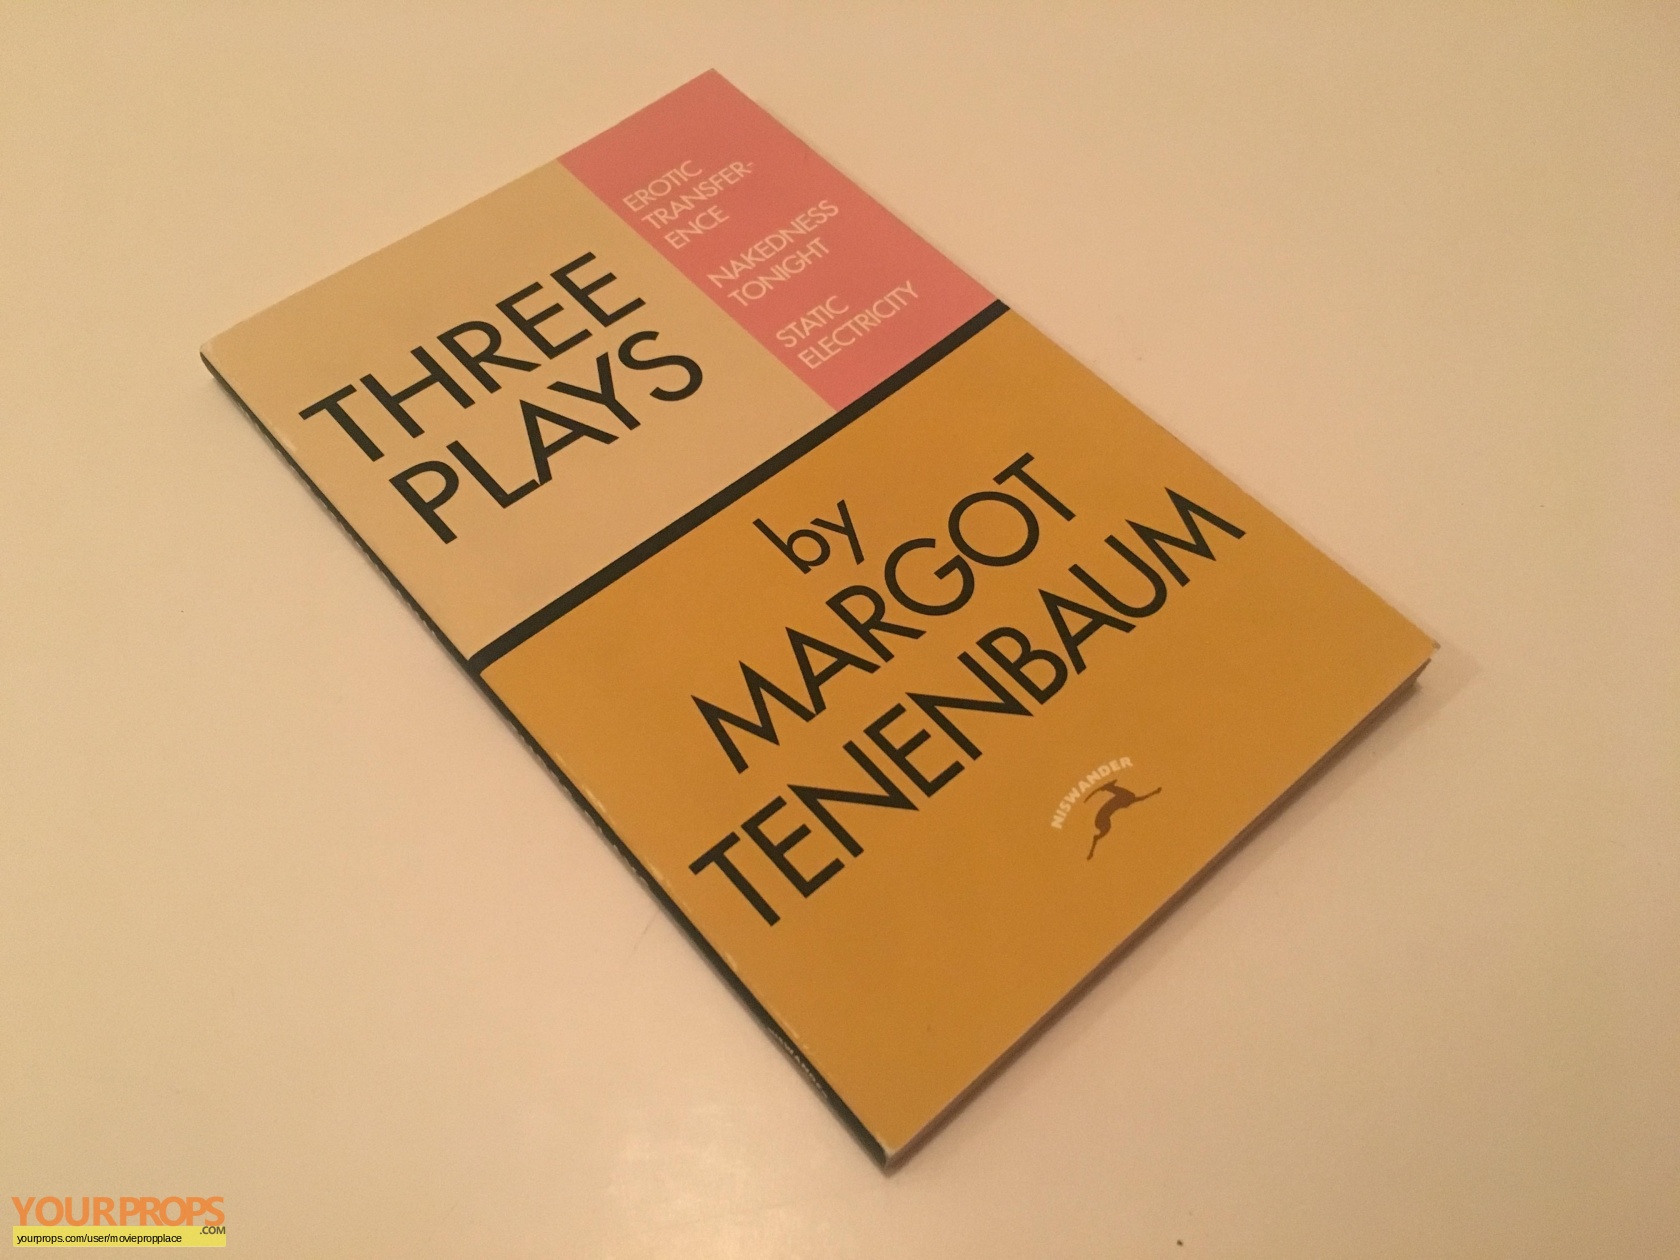 The Royal Tenenbaums Margot Tenenbaum’s book of plays original movie prop